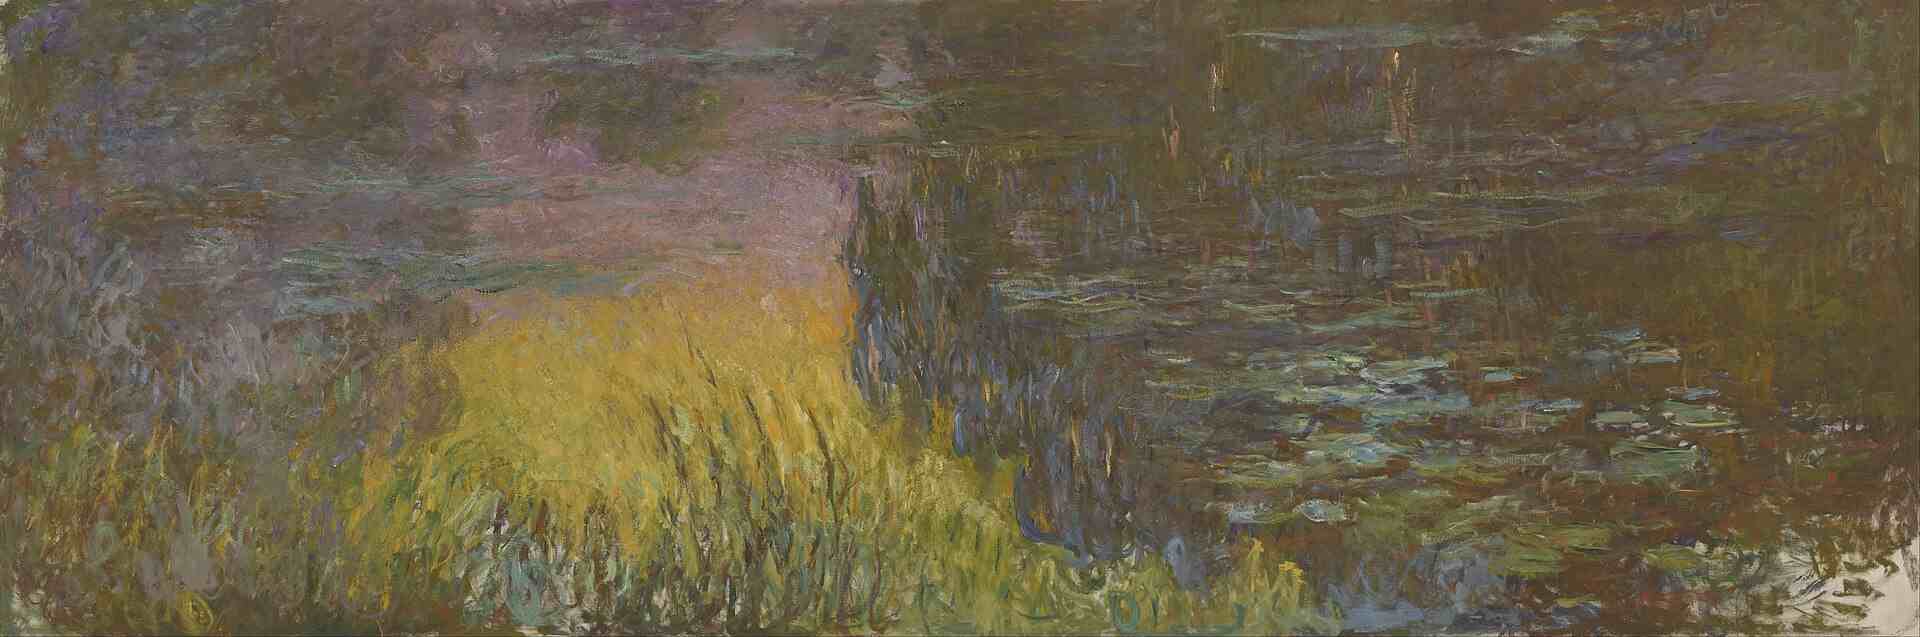 Tranh phong cảnh nổi tiếng Water Lilies - Setting Sun của Claude Monet